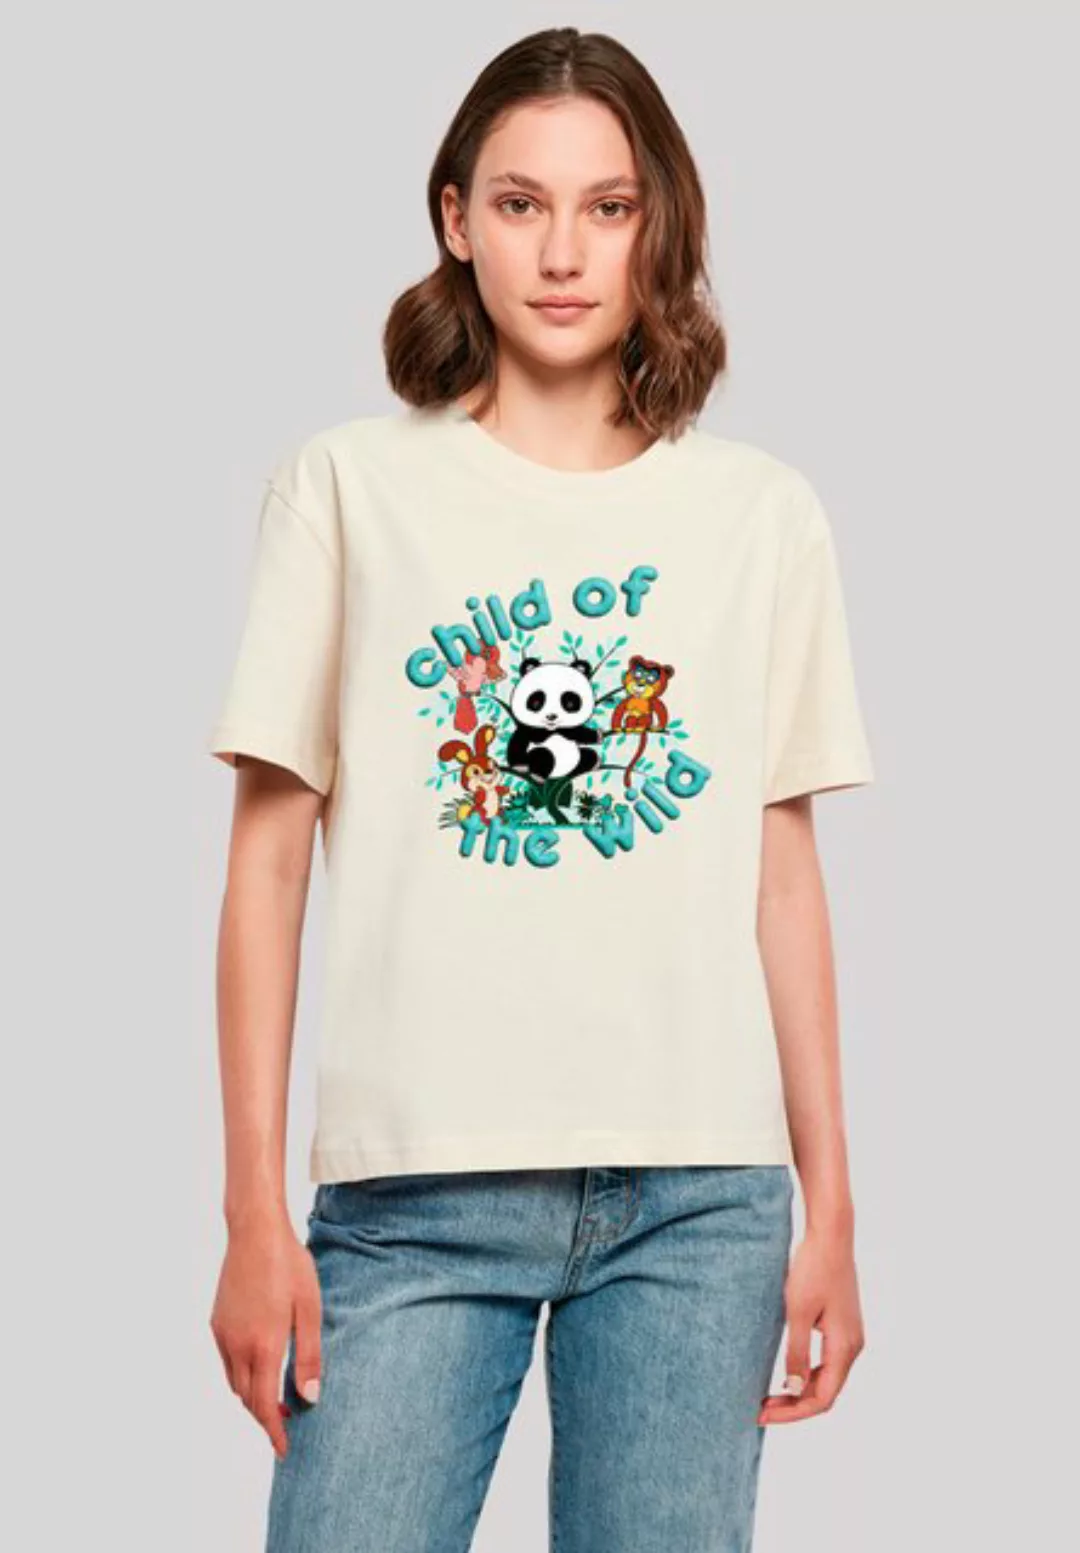 F4NT4STIC T-Shirt Tao Tao Child Of The Wild Retro, Heroes of Childhood, TV günstig online kaufen